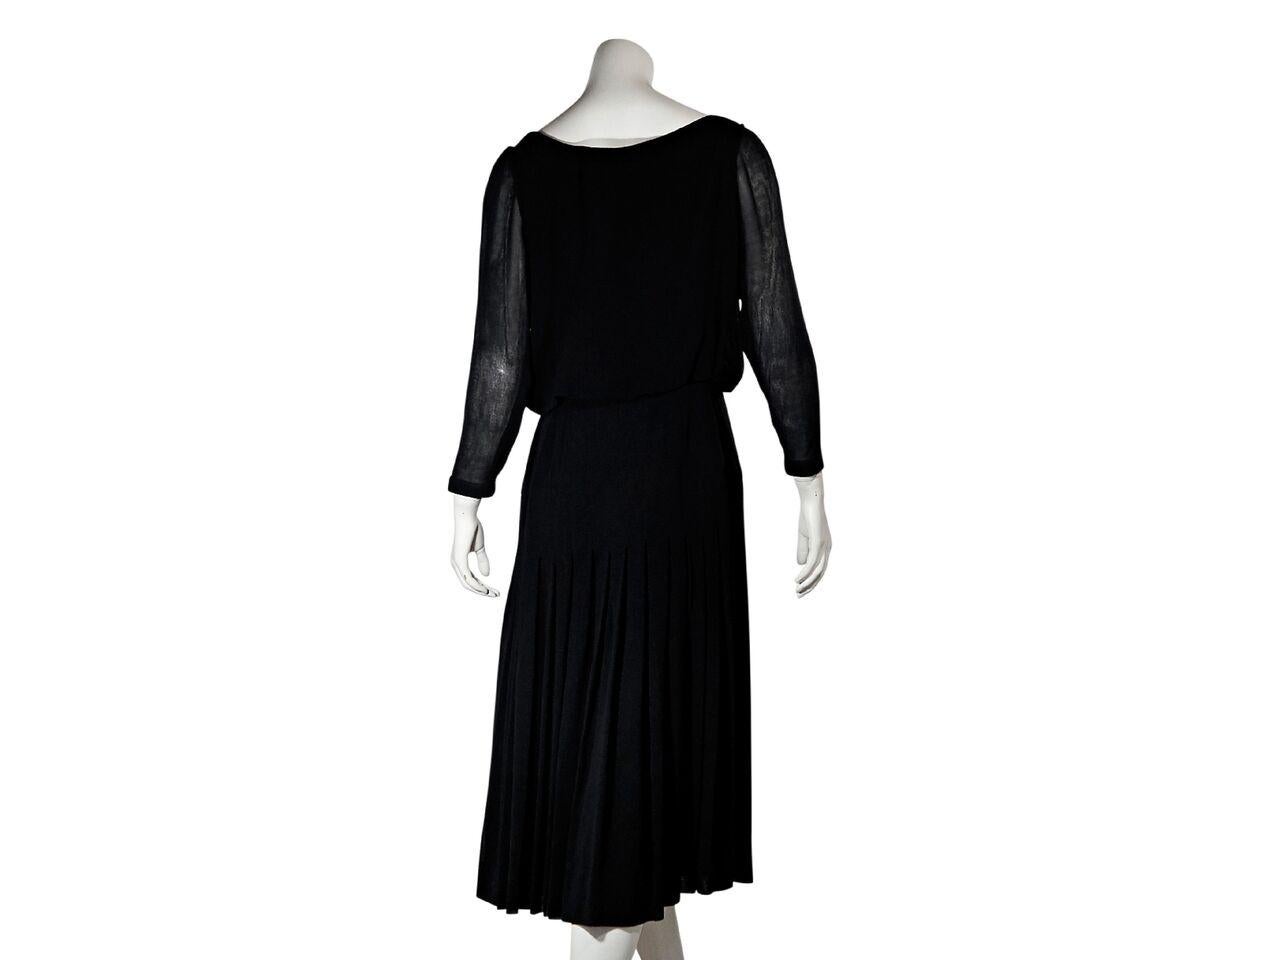 Product details:  Vintage black faux wrap dress by Chanel.  Deep v-neck.  Bracelet-length sleeves.  Button-front closure.  Pleated skirting.  Goldtone hardware. 35.5